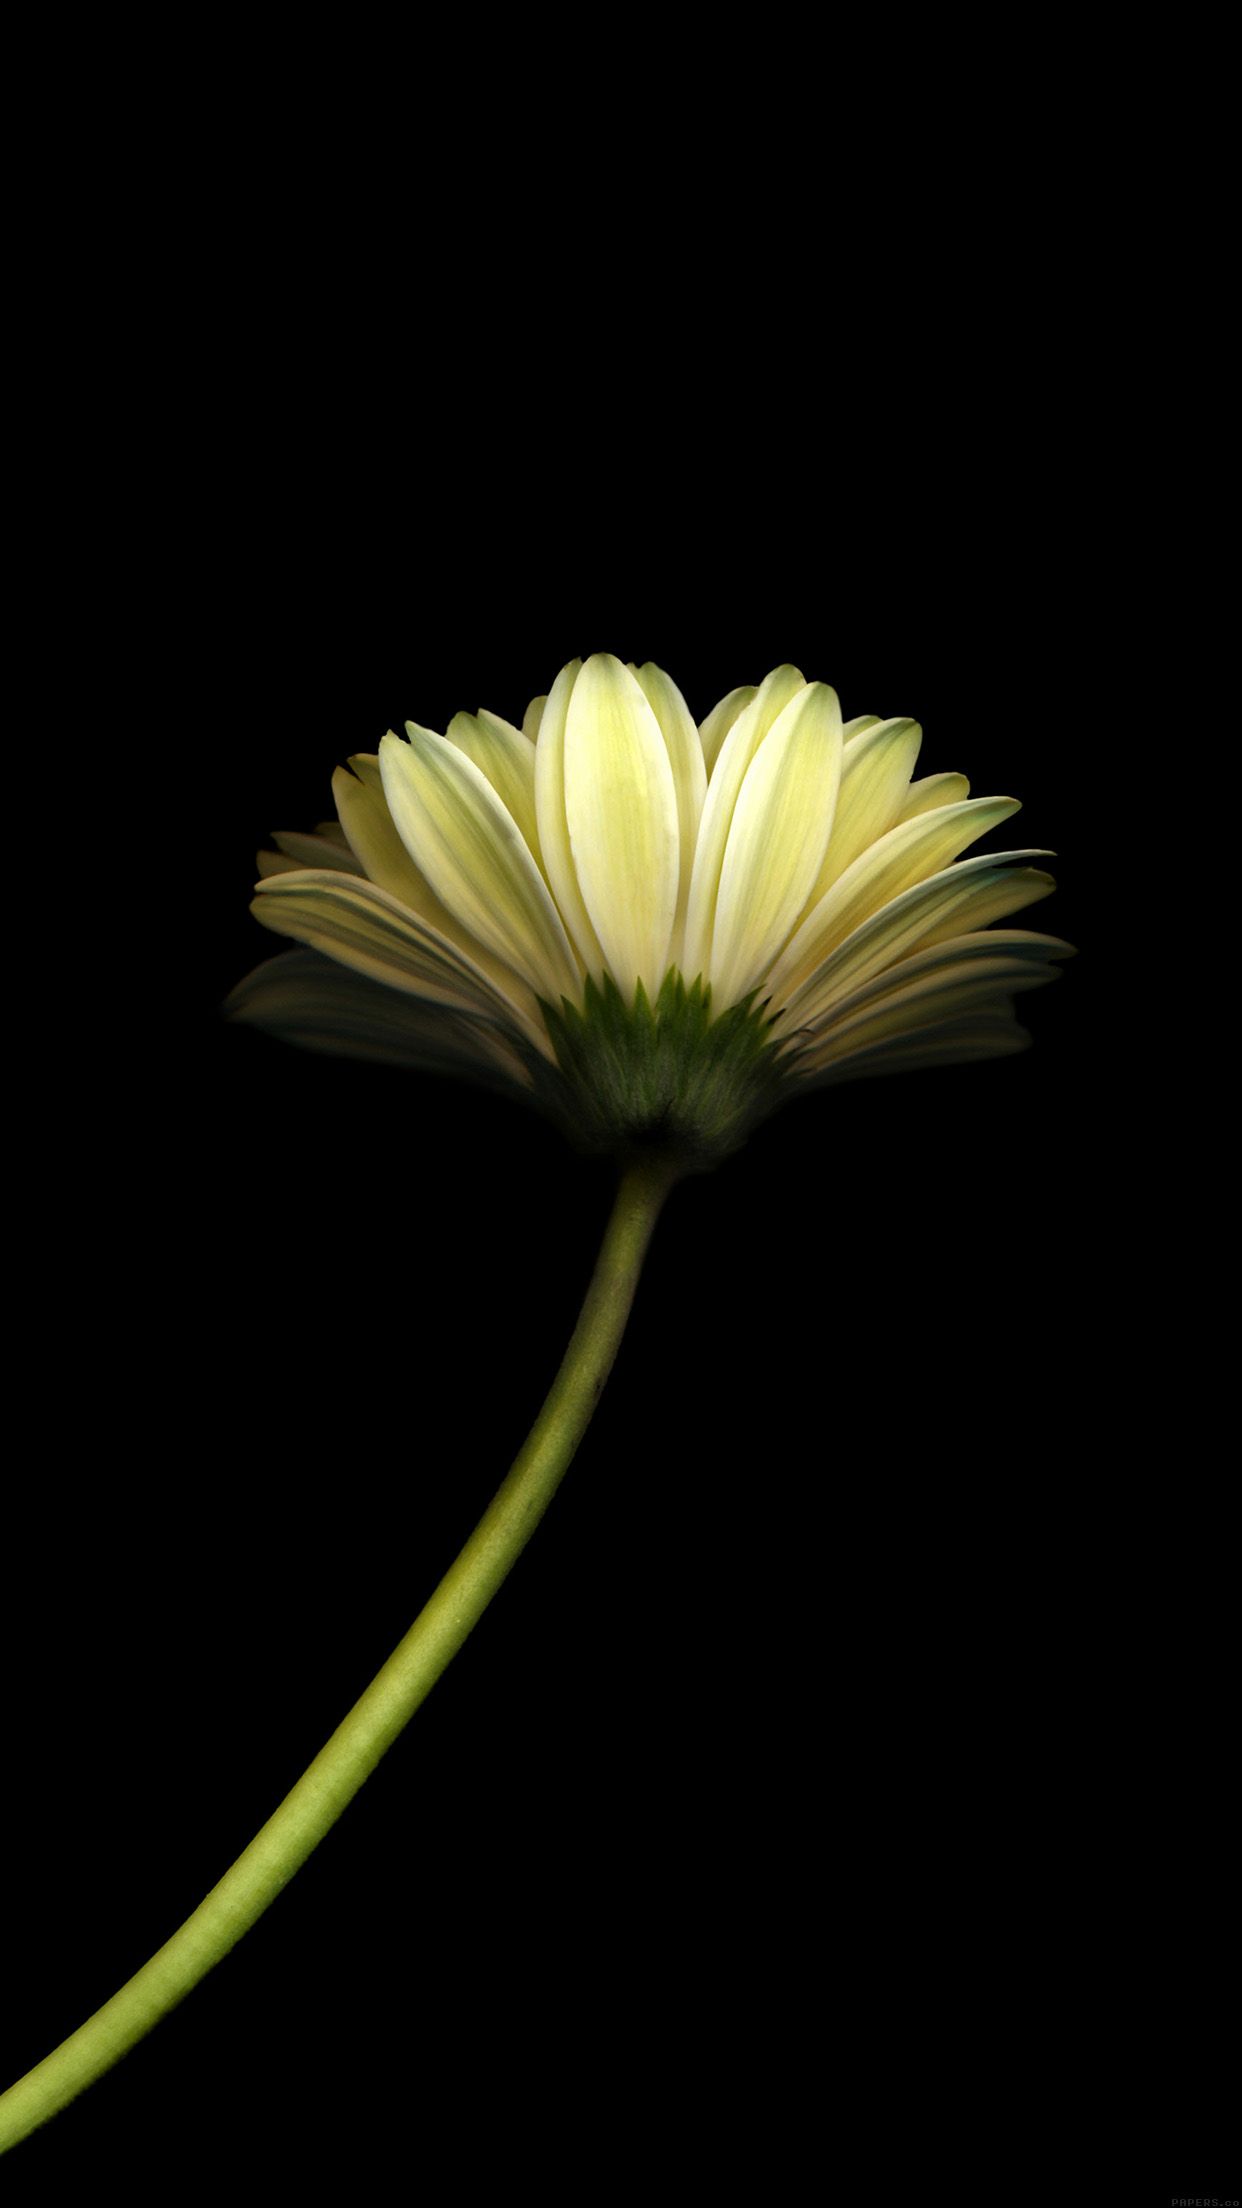 Dandelion Flower Black Background iPhone 6 Plus HD Dark Wallpaper For Mobile Wallpaper & Background Download